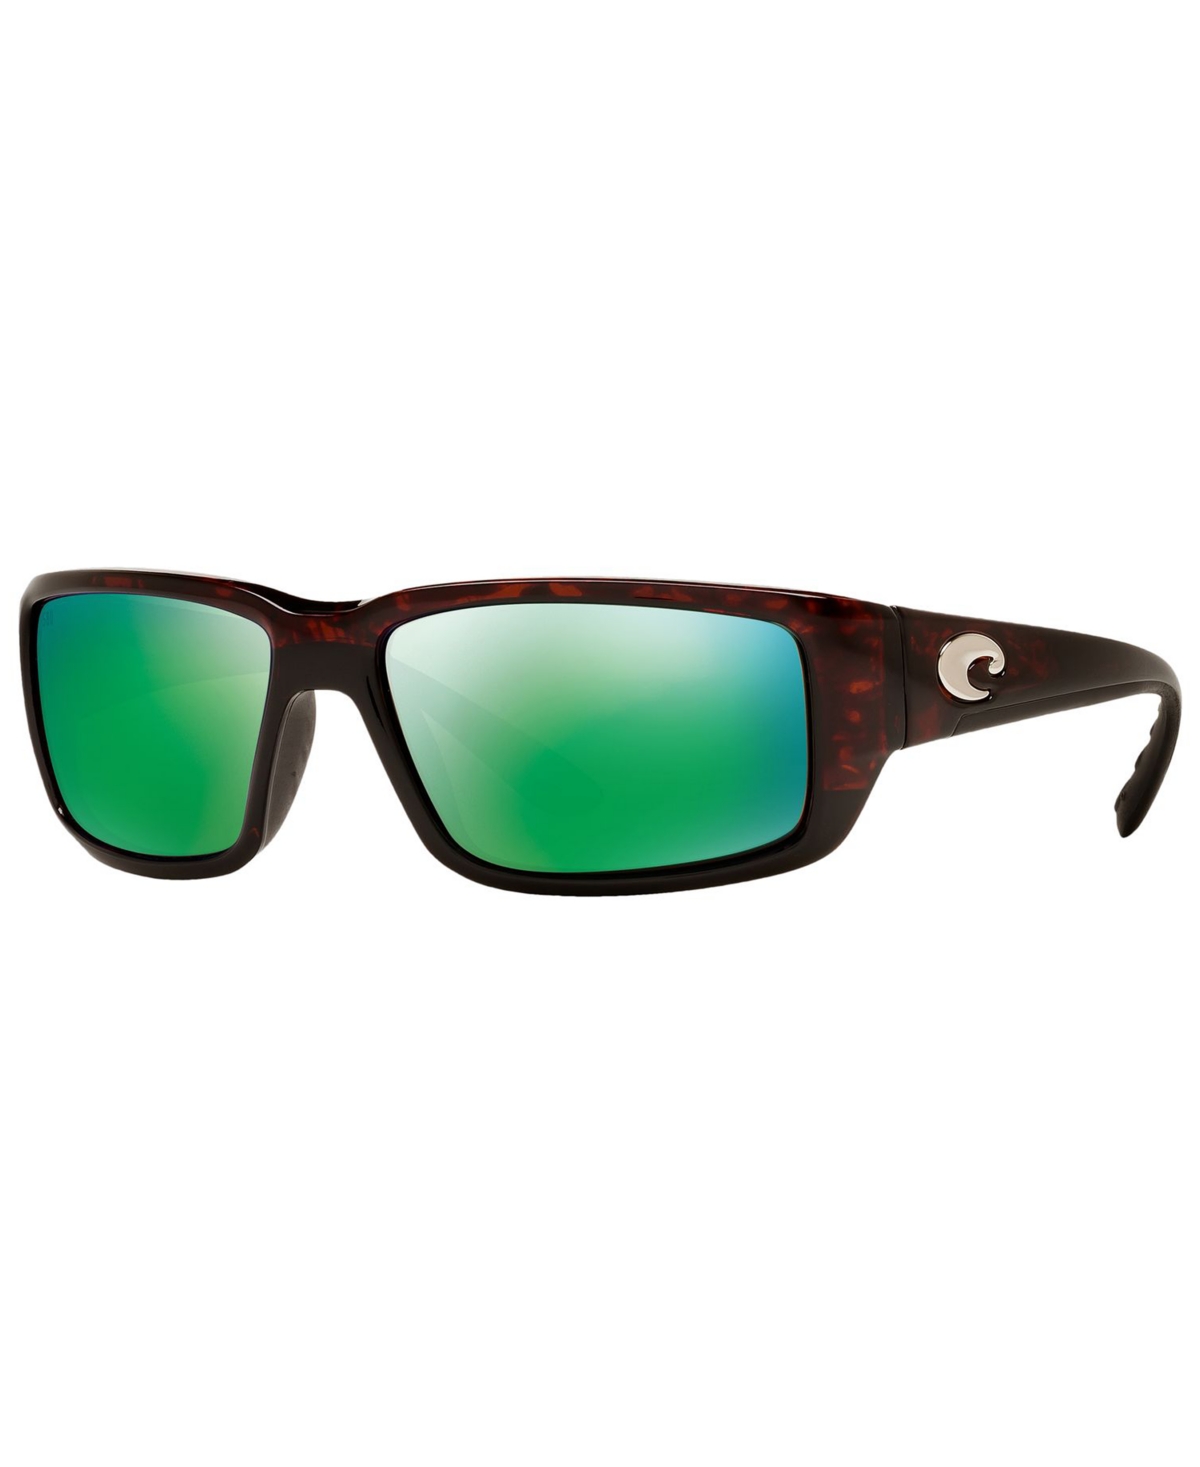 Men's Polarized Sunglasses, Fantail - Black/Mirror Blue Polarized